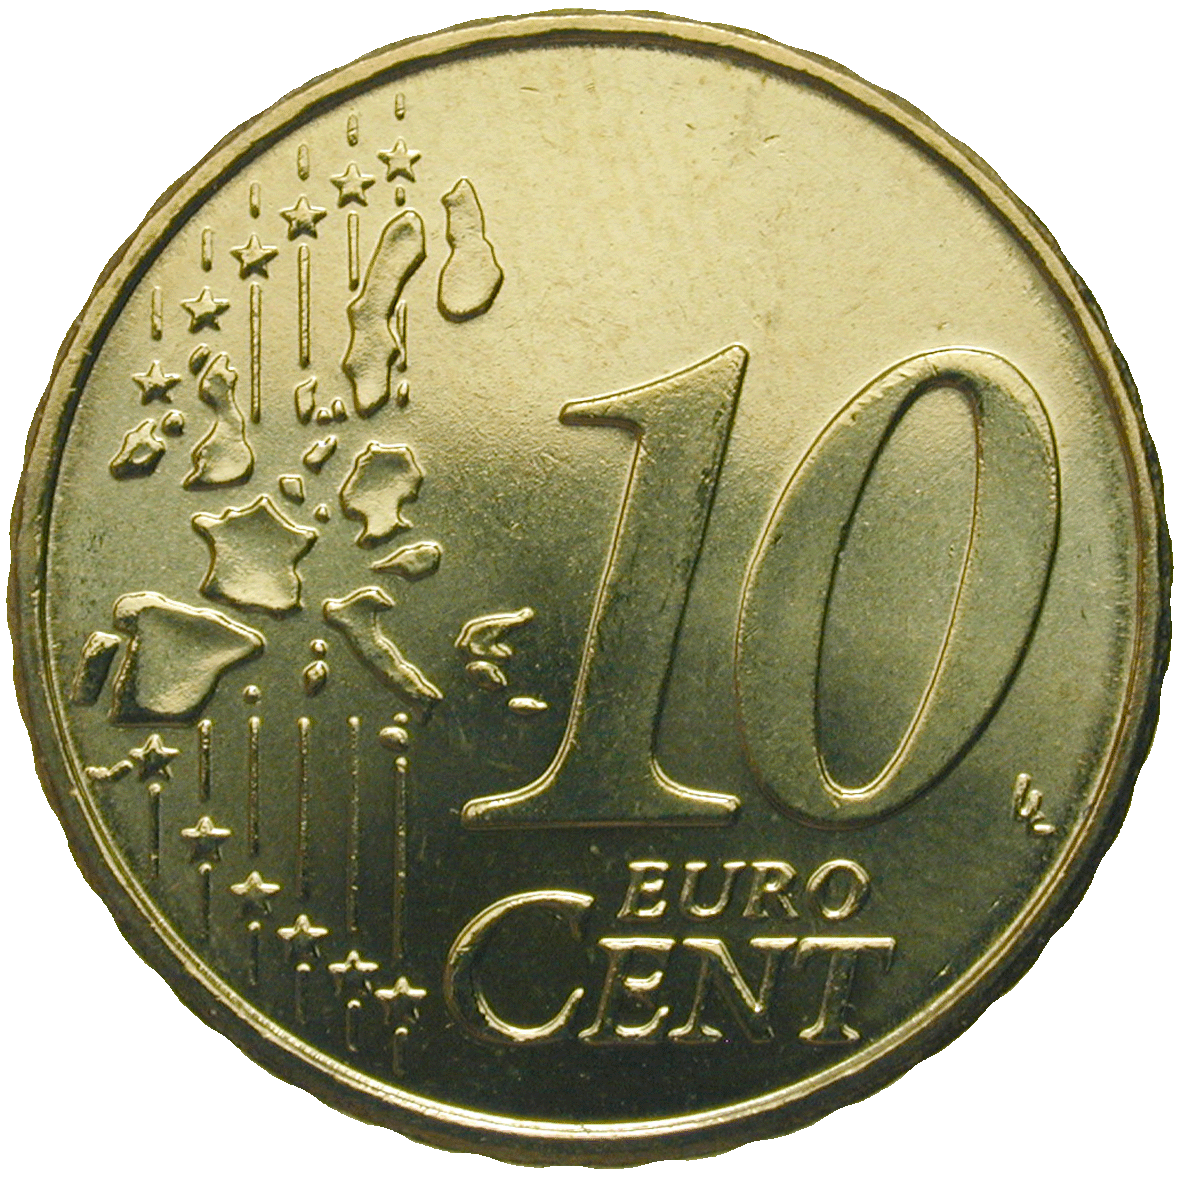 Republic of Greece, 10 Euro Cent 2002 (reverse)